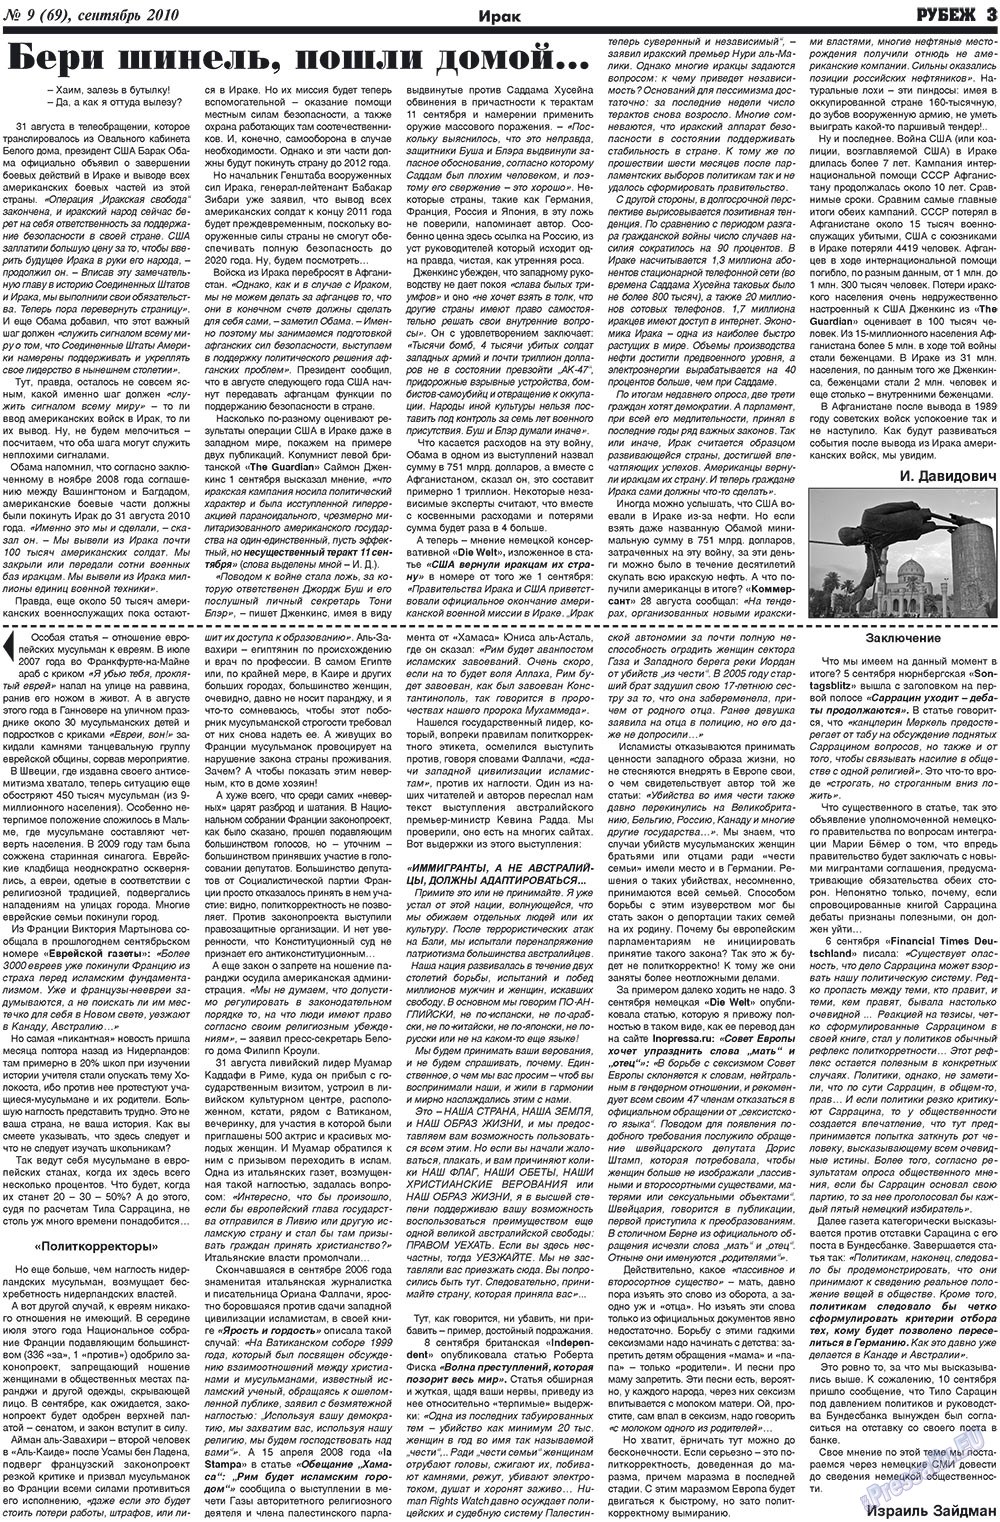 Рубеж, газета. 2010 №9 стр.3